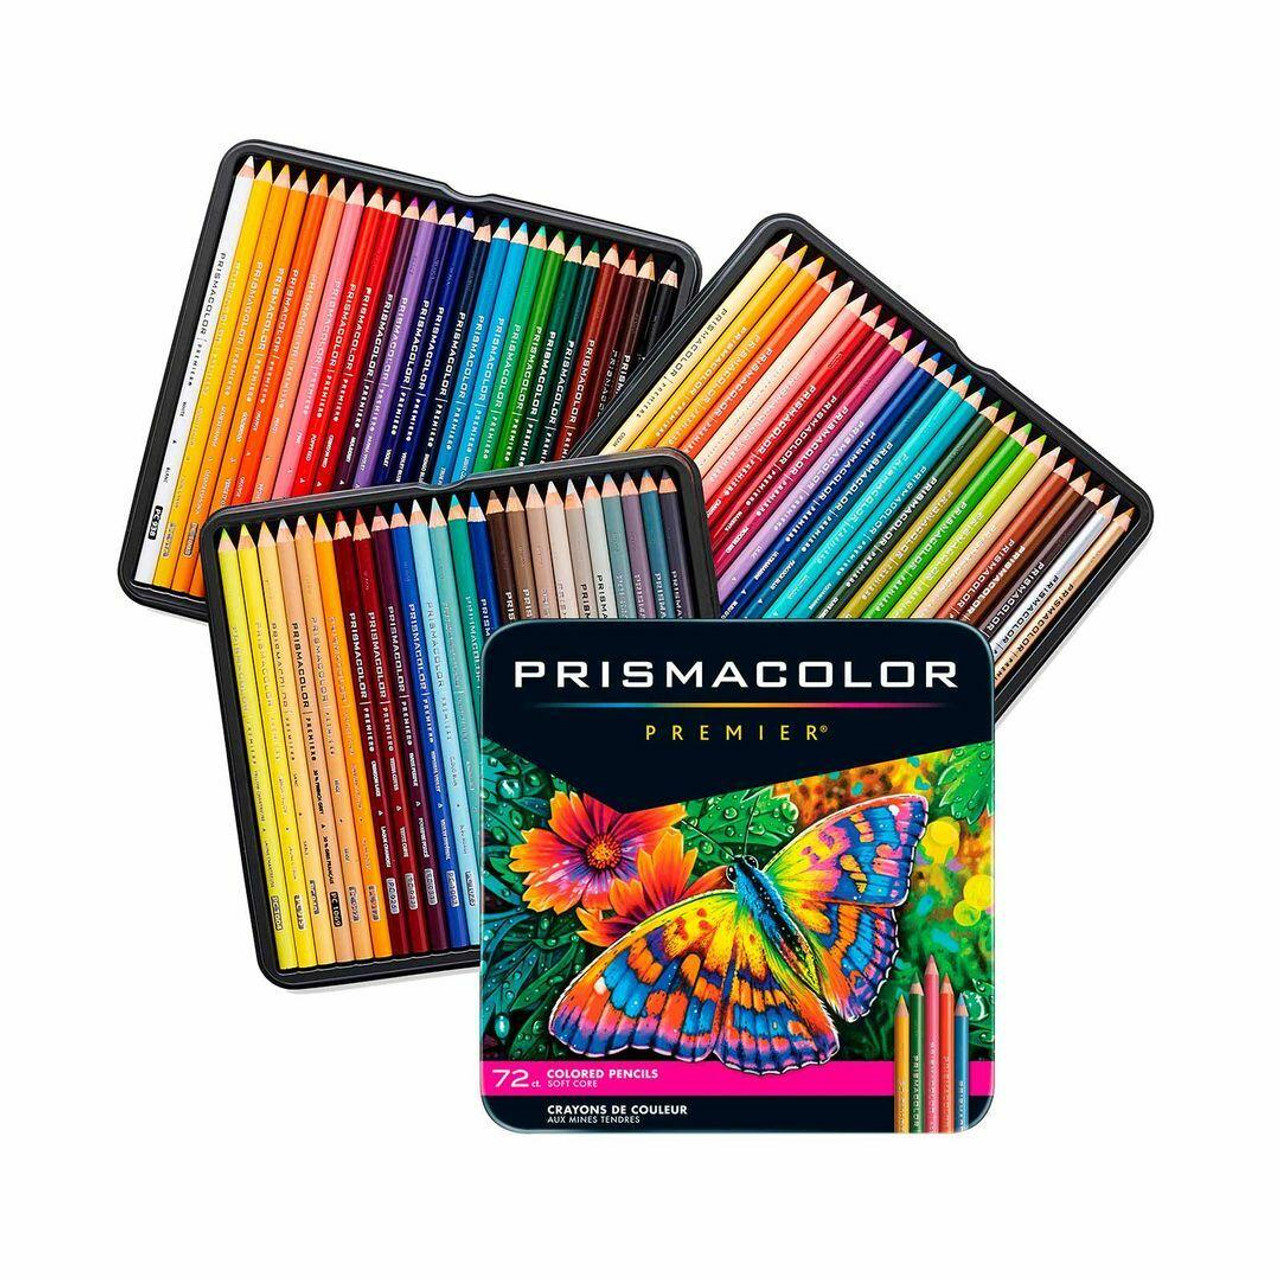 https://cdn11.bigcommerce.com/s-9uf88xhege/images/stencil/1280x1280/products/626/49390/sanford-prismacolor-premier-thick-core-colored-pencil-72-set__71687.1689964674.jpg?c=1?imbypass=on